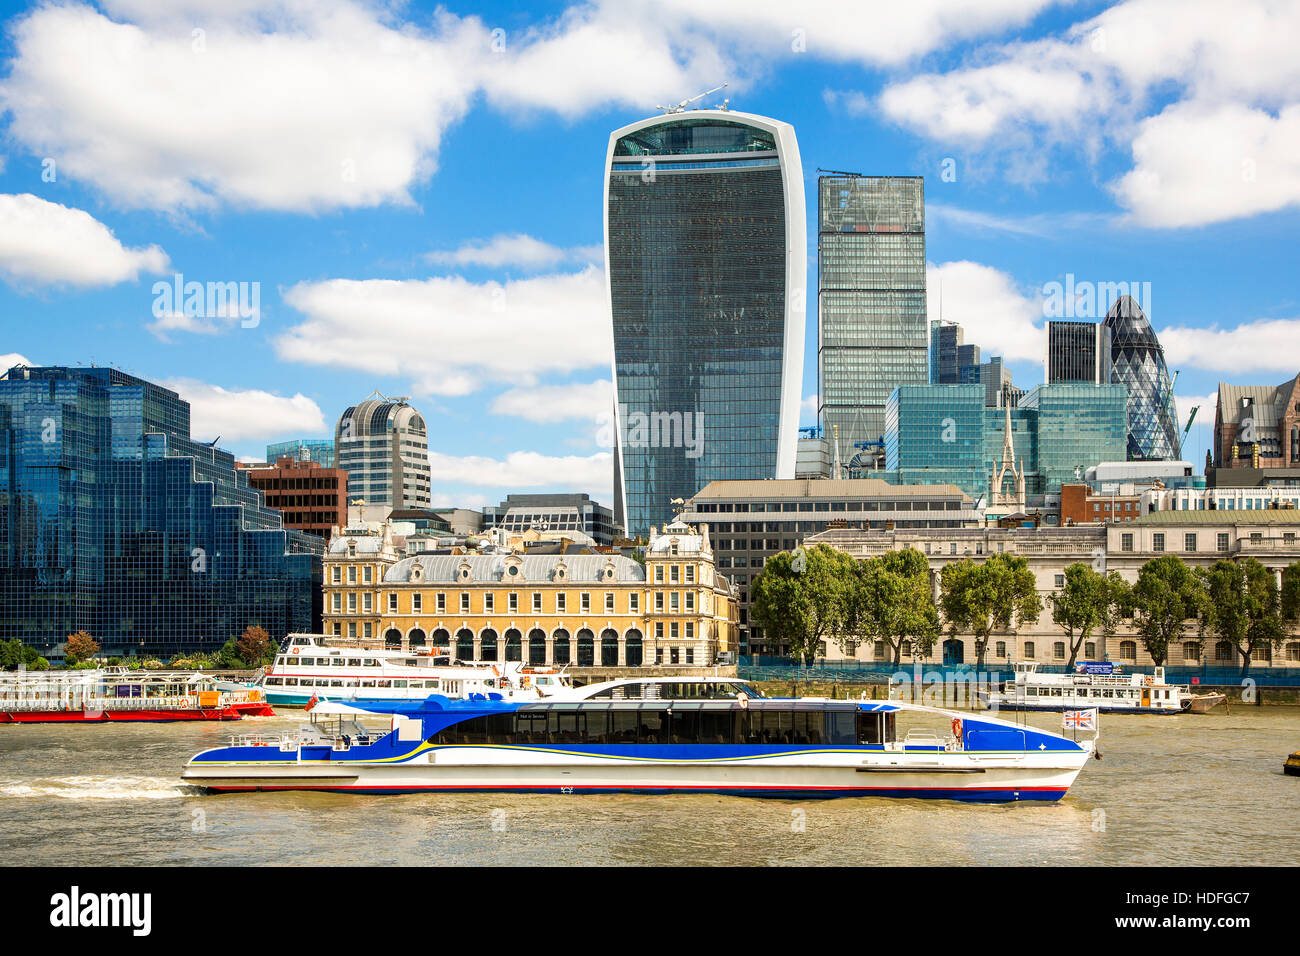 London. City buildings along river Thames. Stock Photo